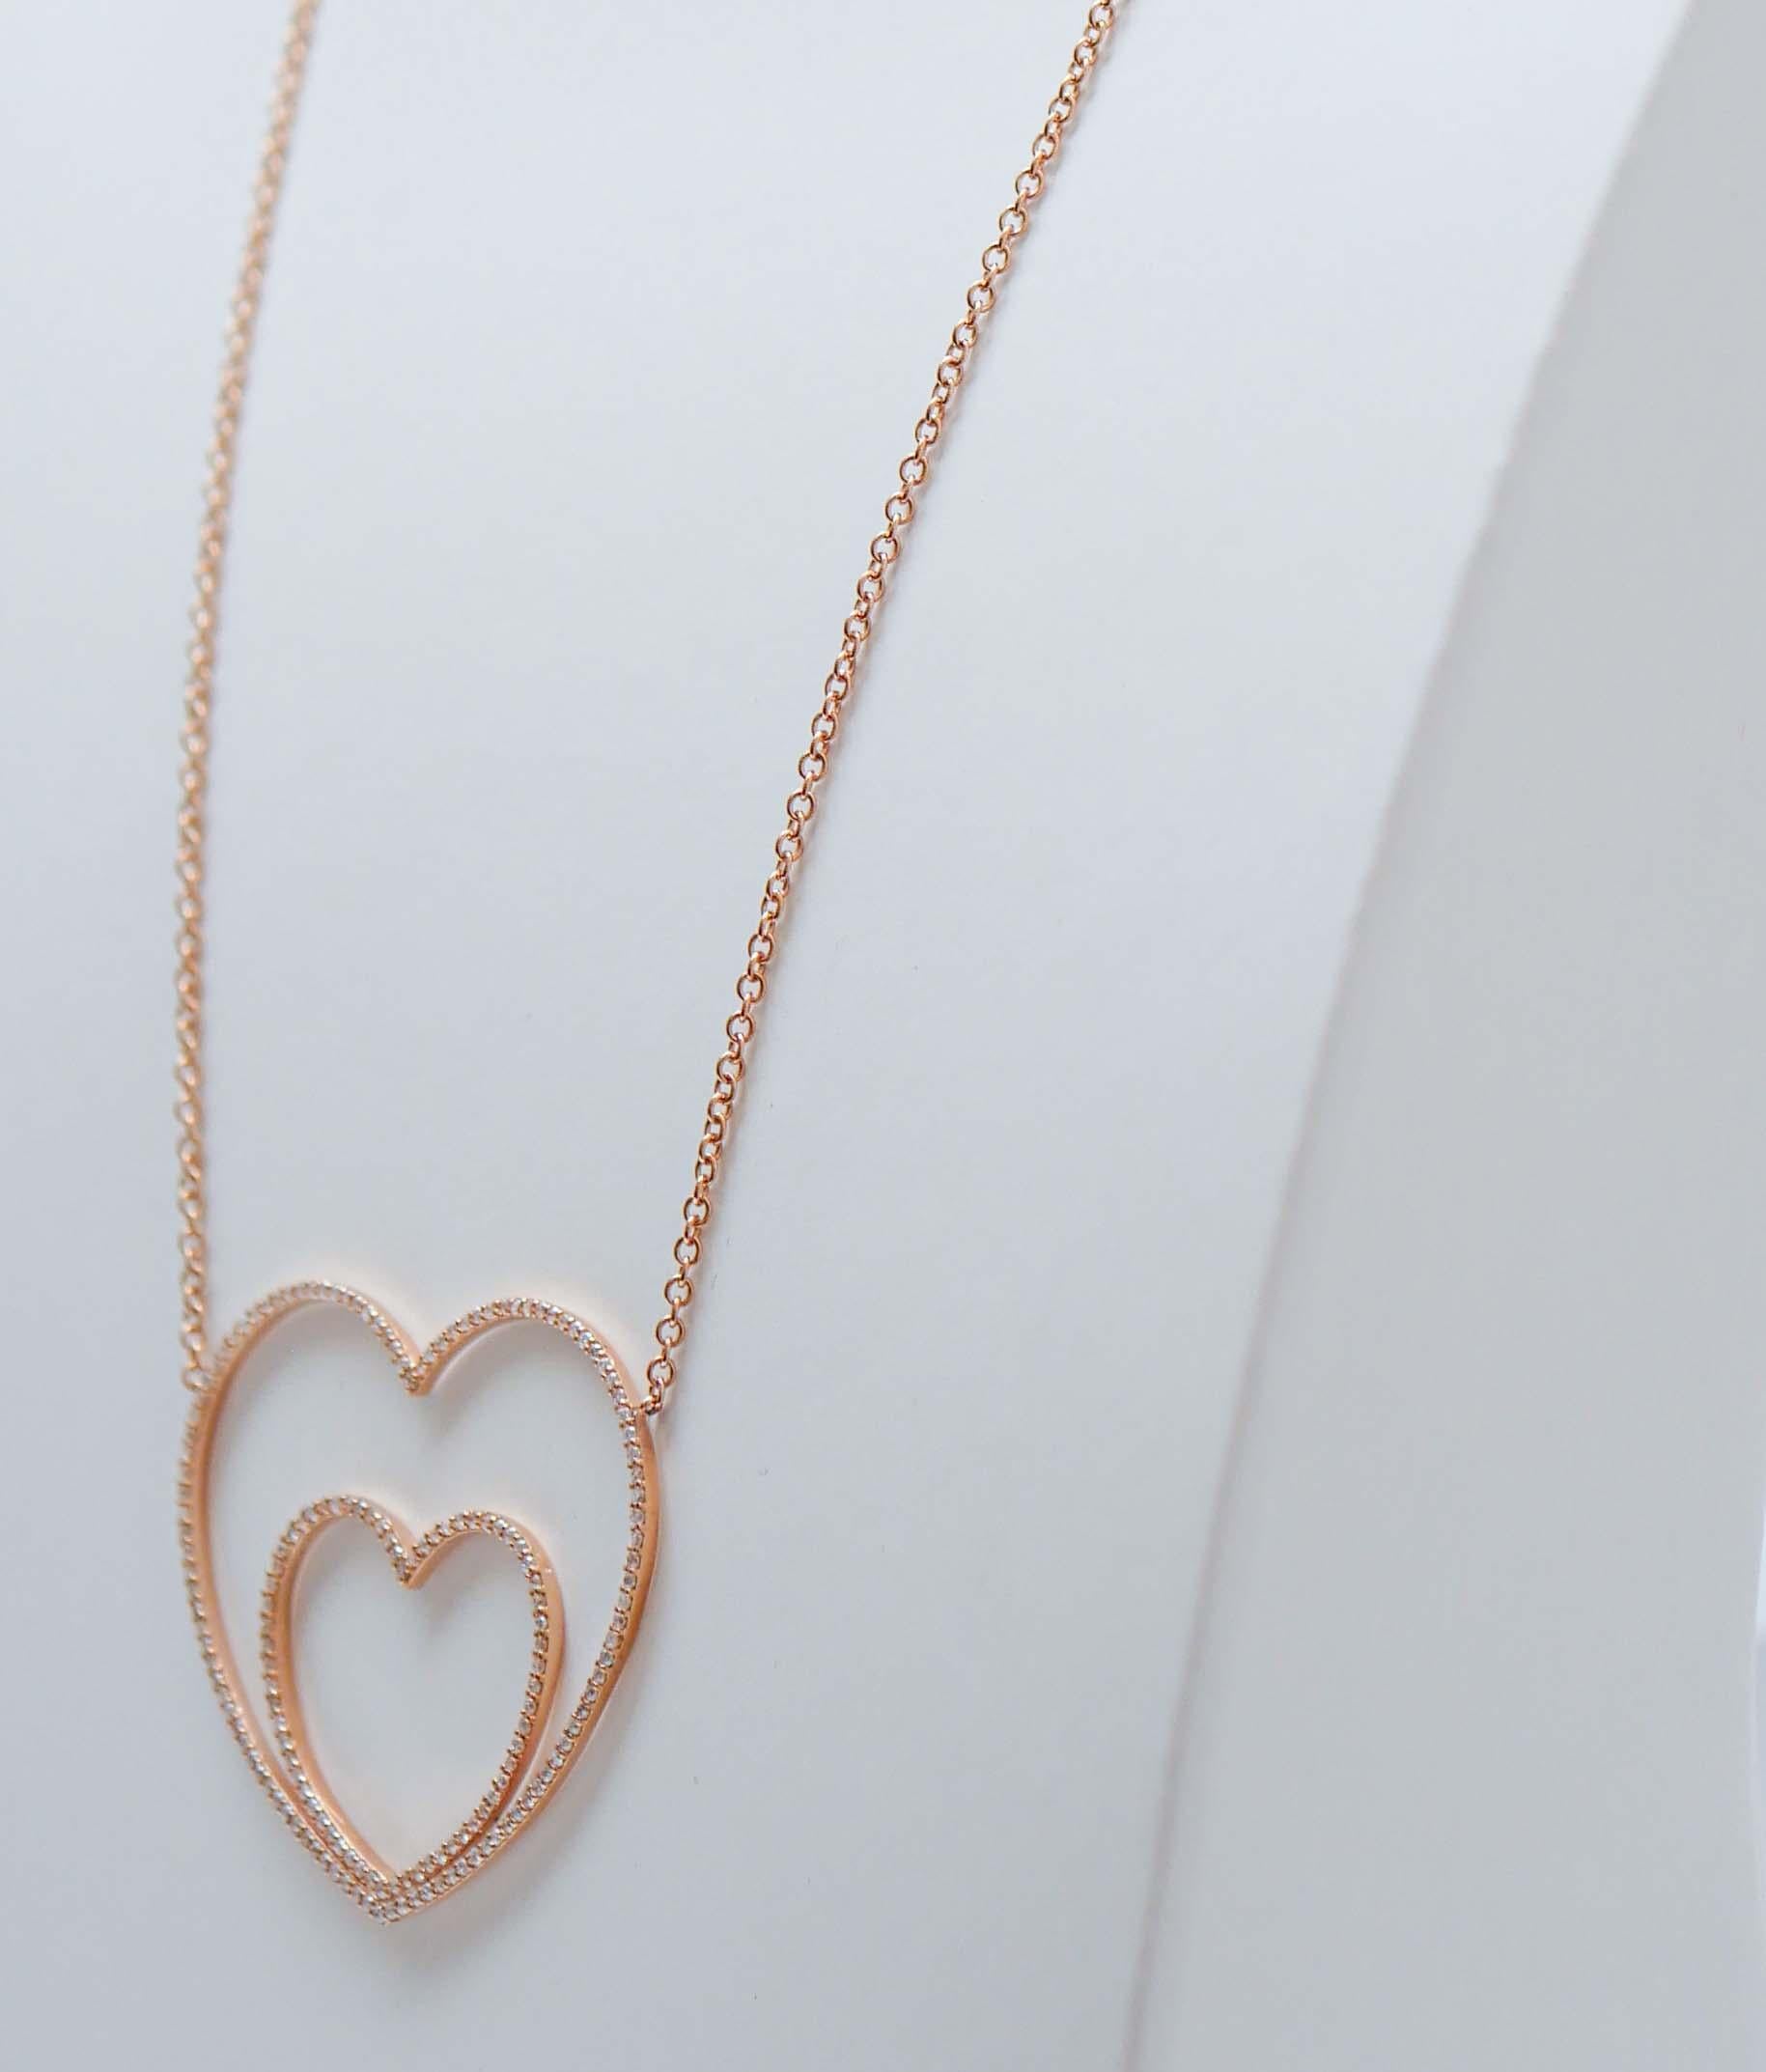 Brilliant Cut Diamonds, 18 Karat Rose Gold Heart Pendant Necklace. For Sale